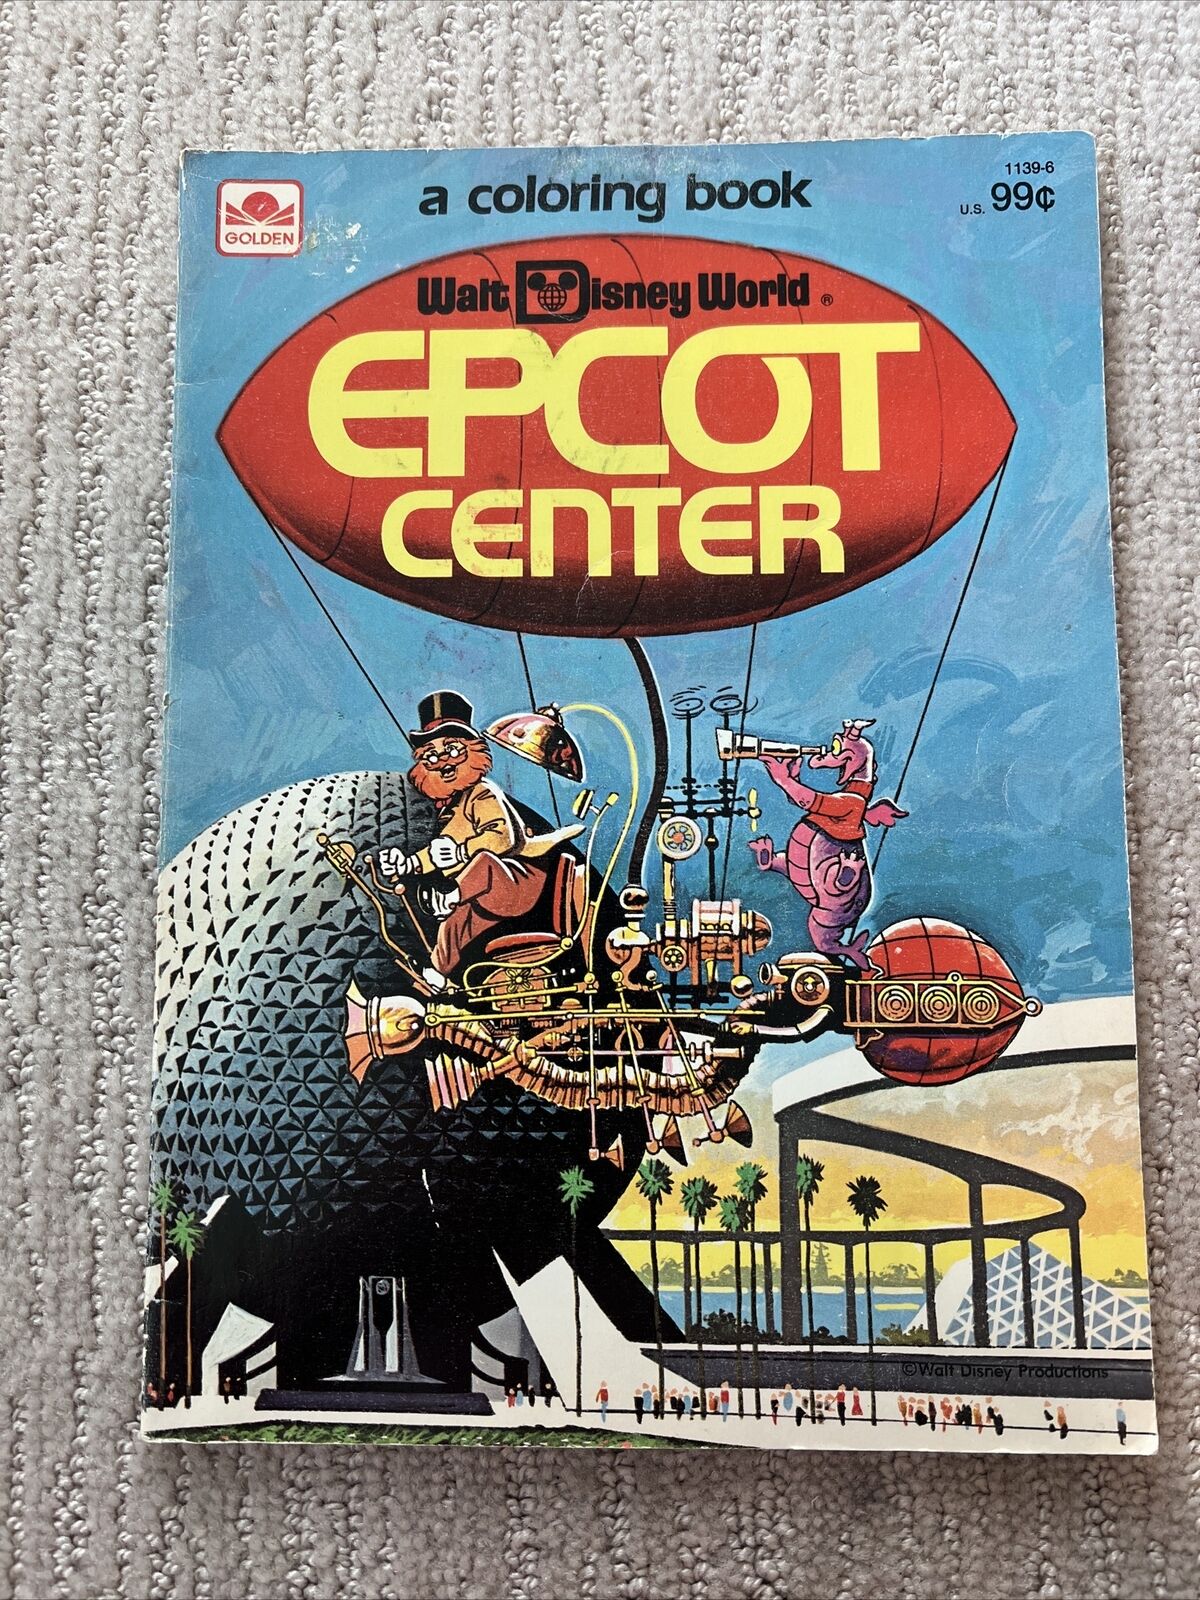 EPCOT CENTER COLORING BOOK WALT DISNEY WORLD GOLDEN #1139-6 1983 WESTERN PUB.